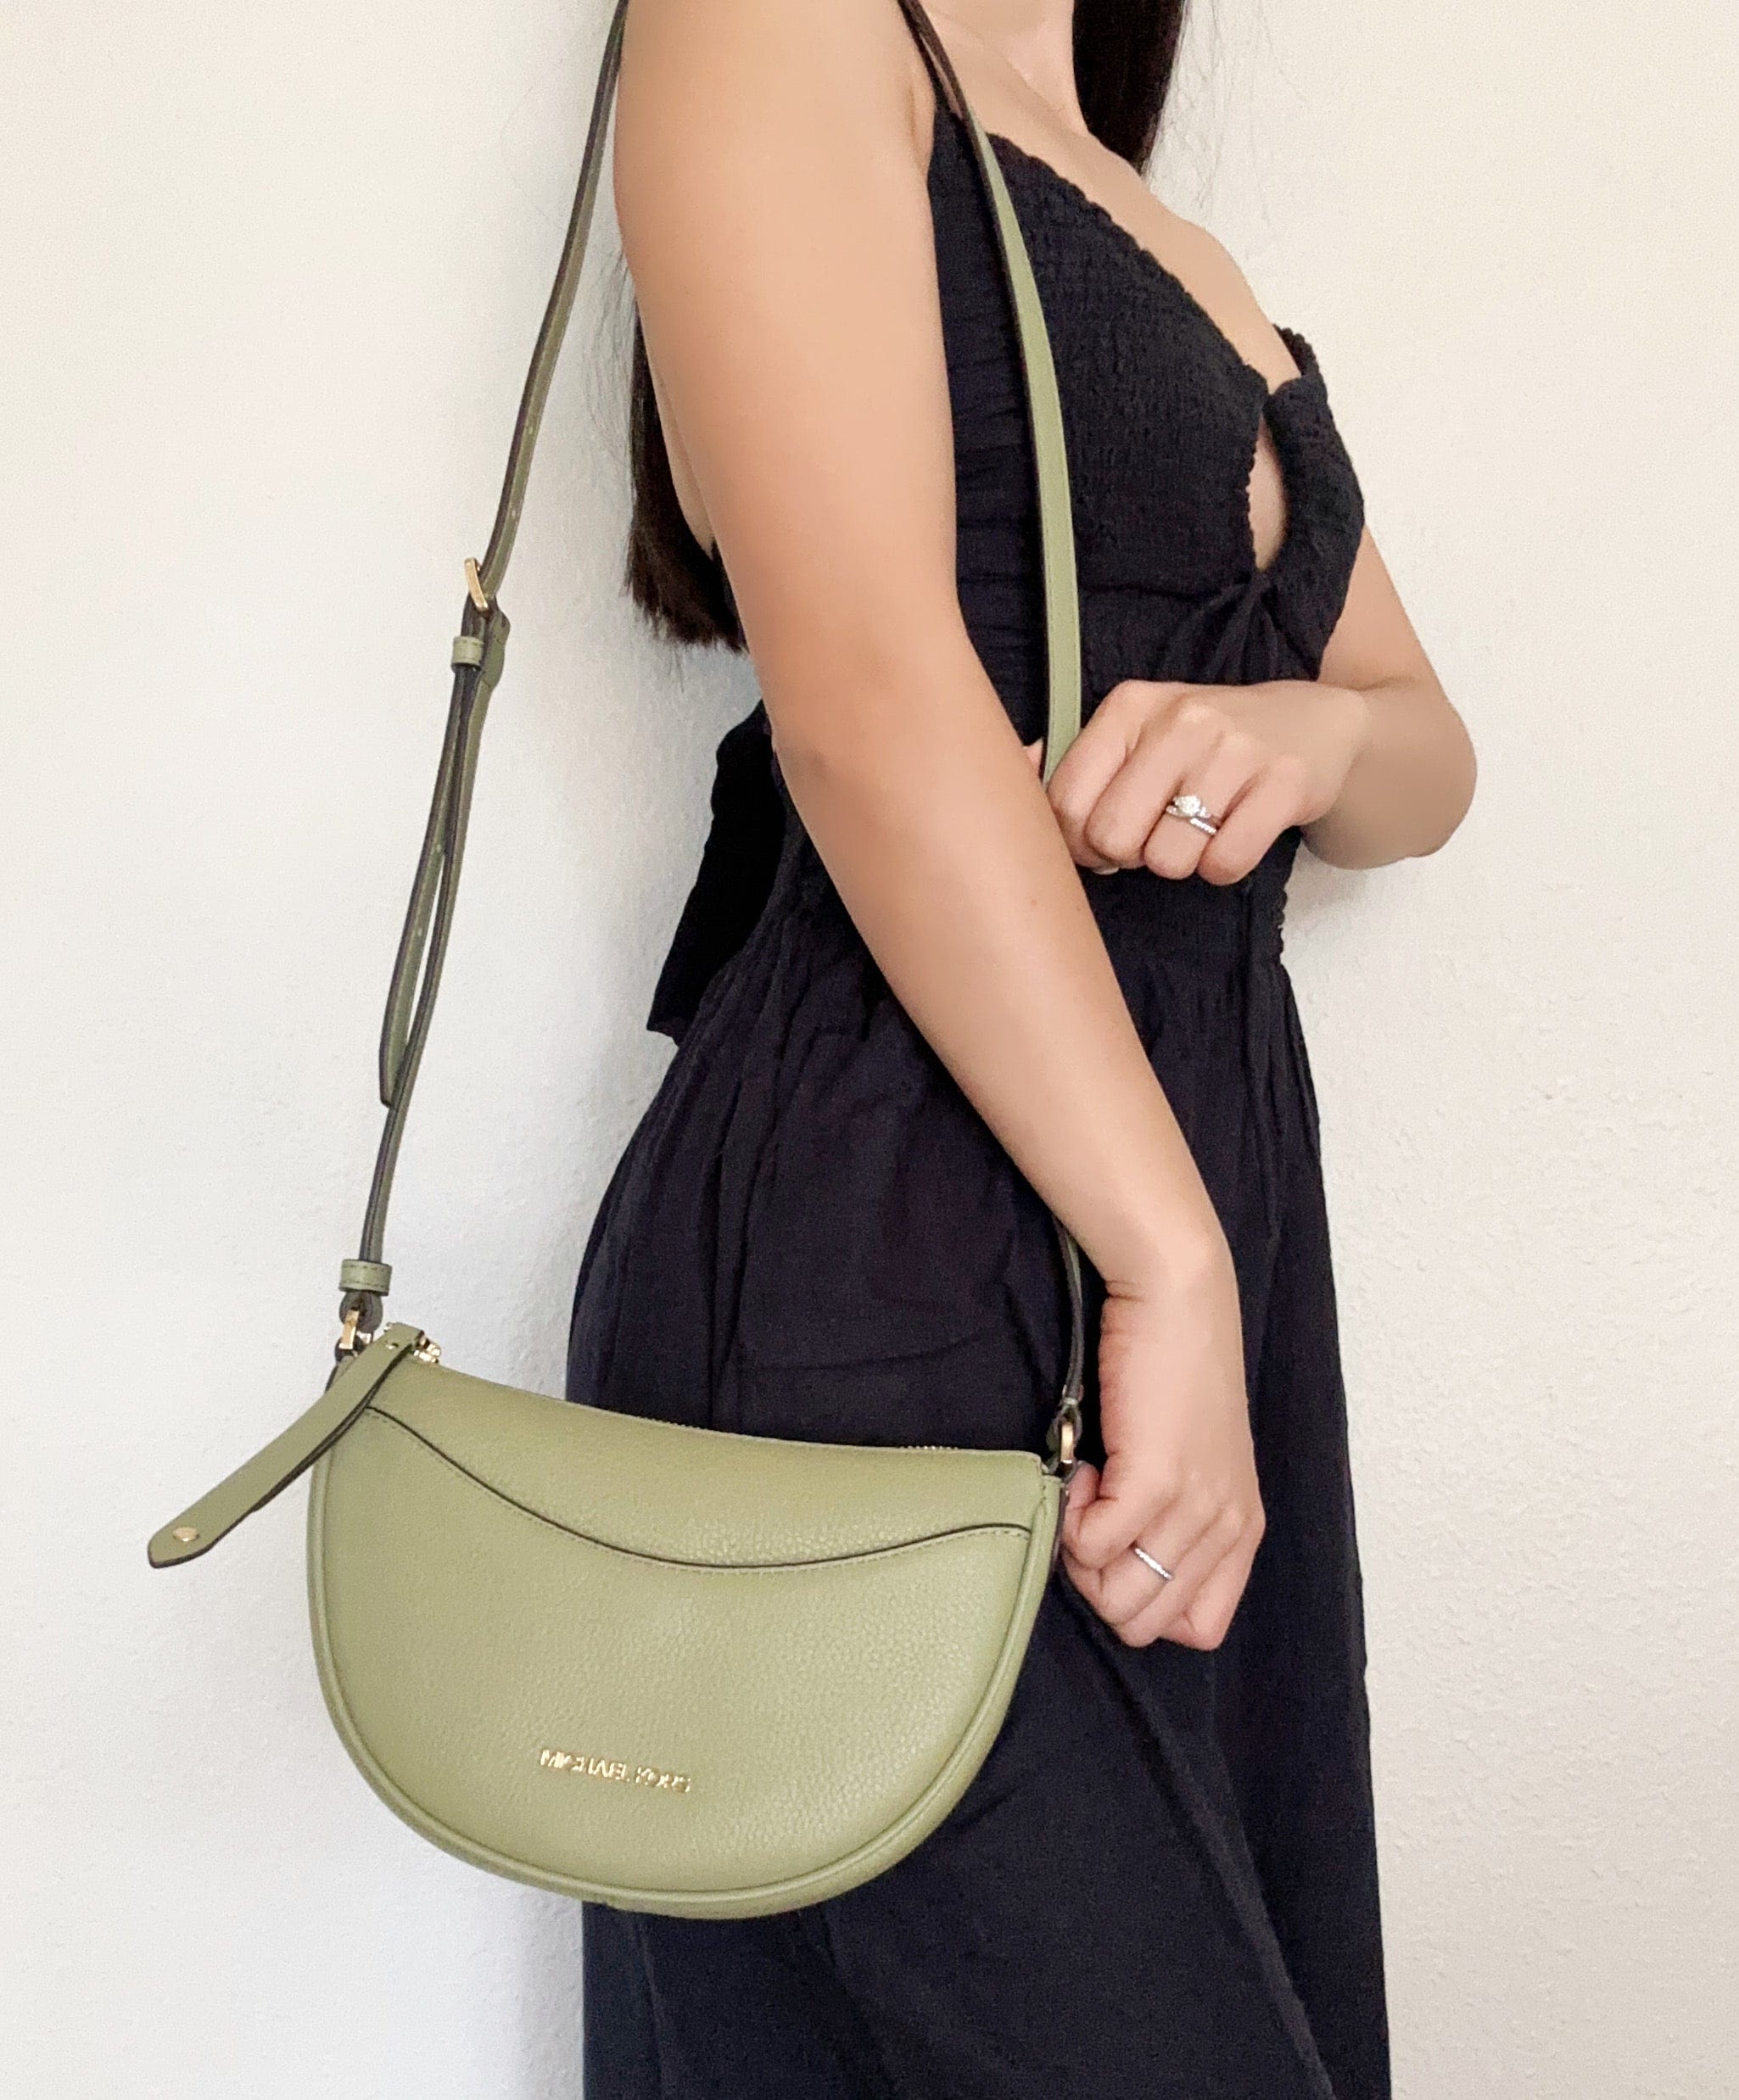 Michael Kors Dover Small Leather Crossbody Bag Purse Handbag (Black):  Handbags